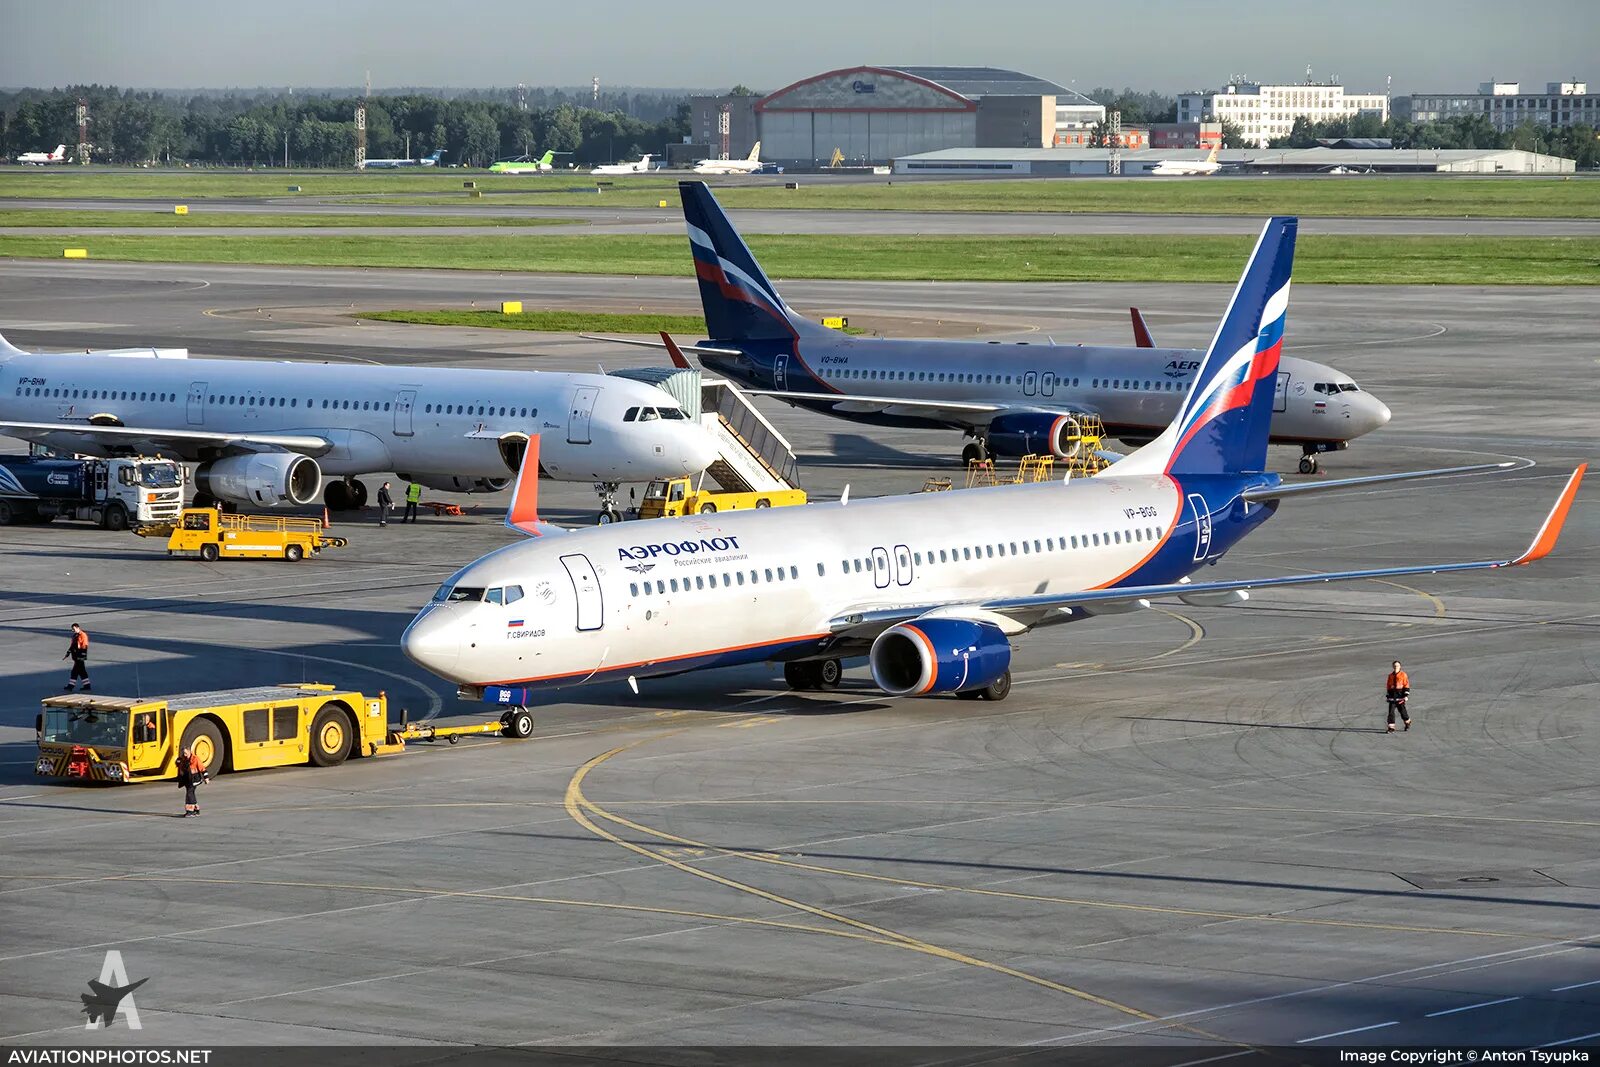 Boeing 737 Aeroflot. Boeing 737 Аэрофлот. Boeing 737-8lj Аэрофлот. Боинг 787 Аэрофлот.